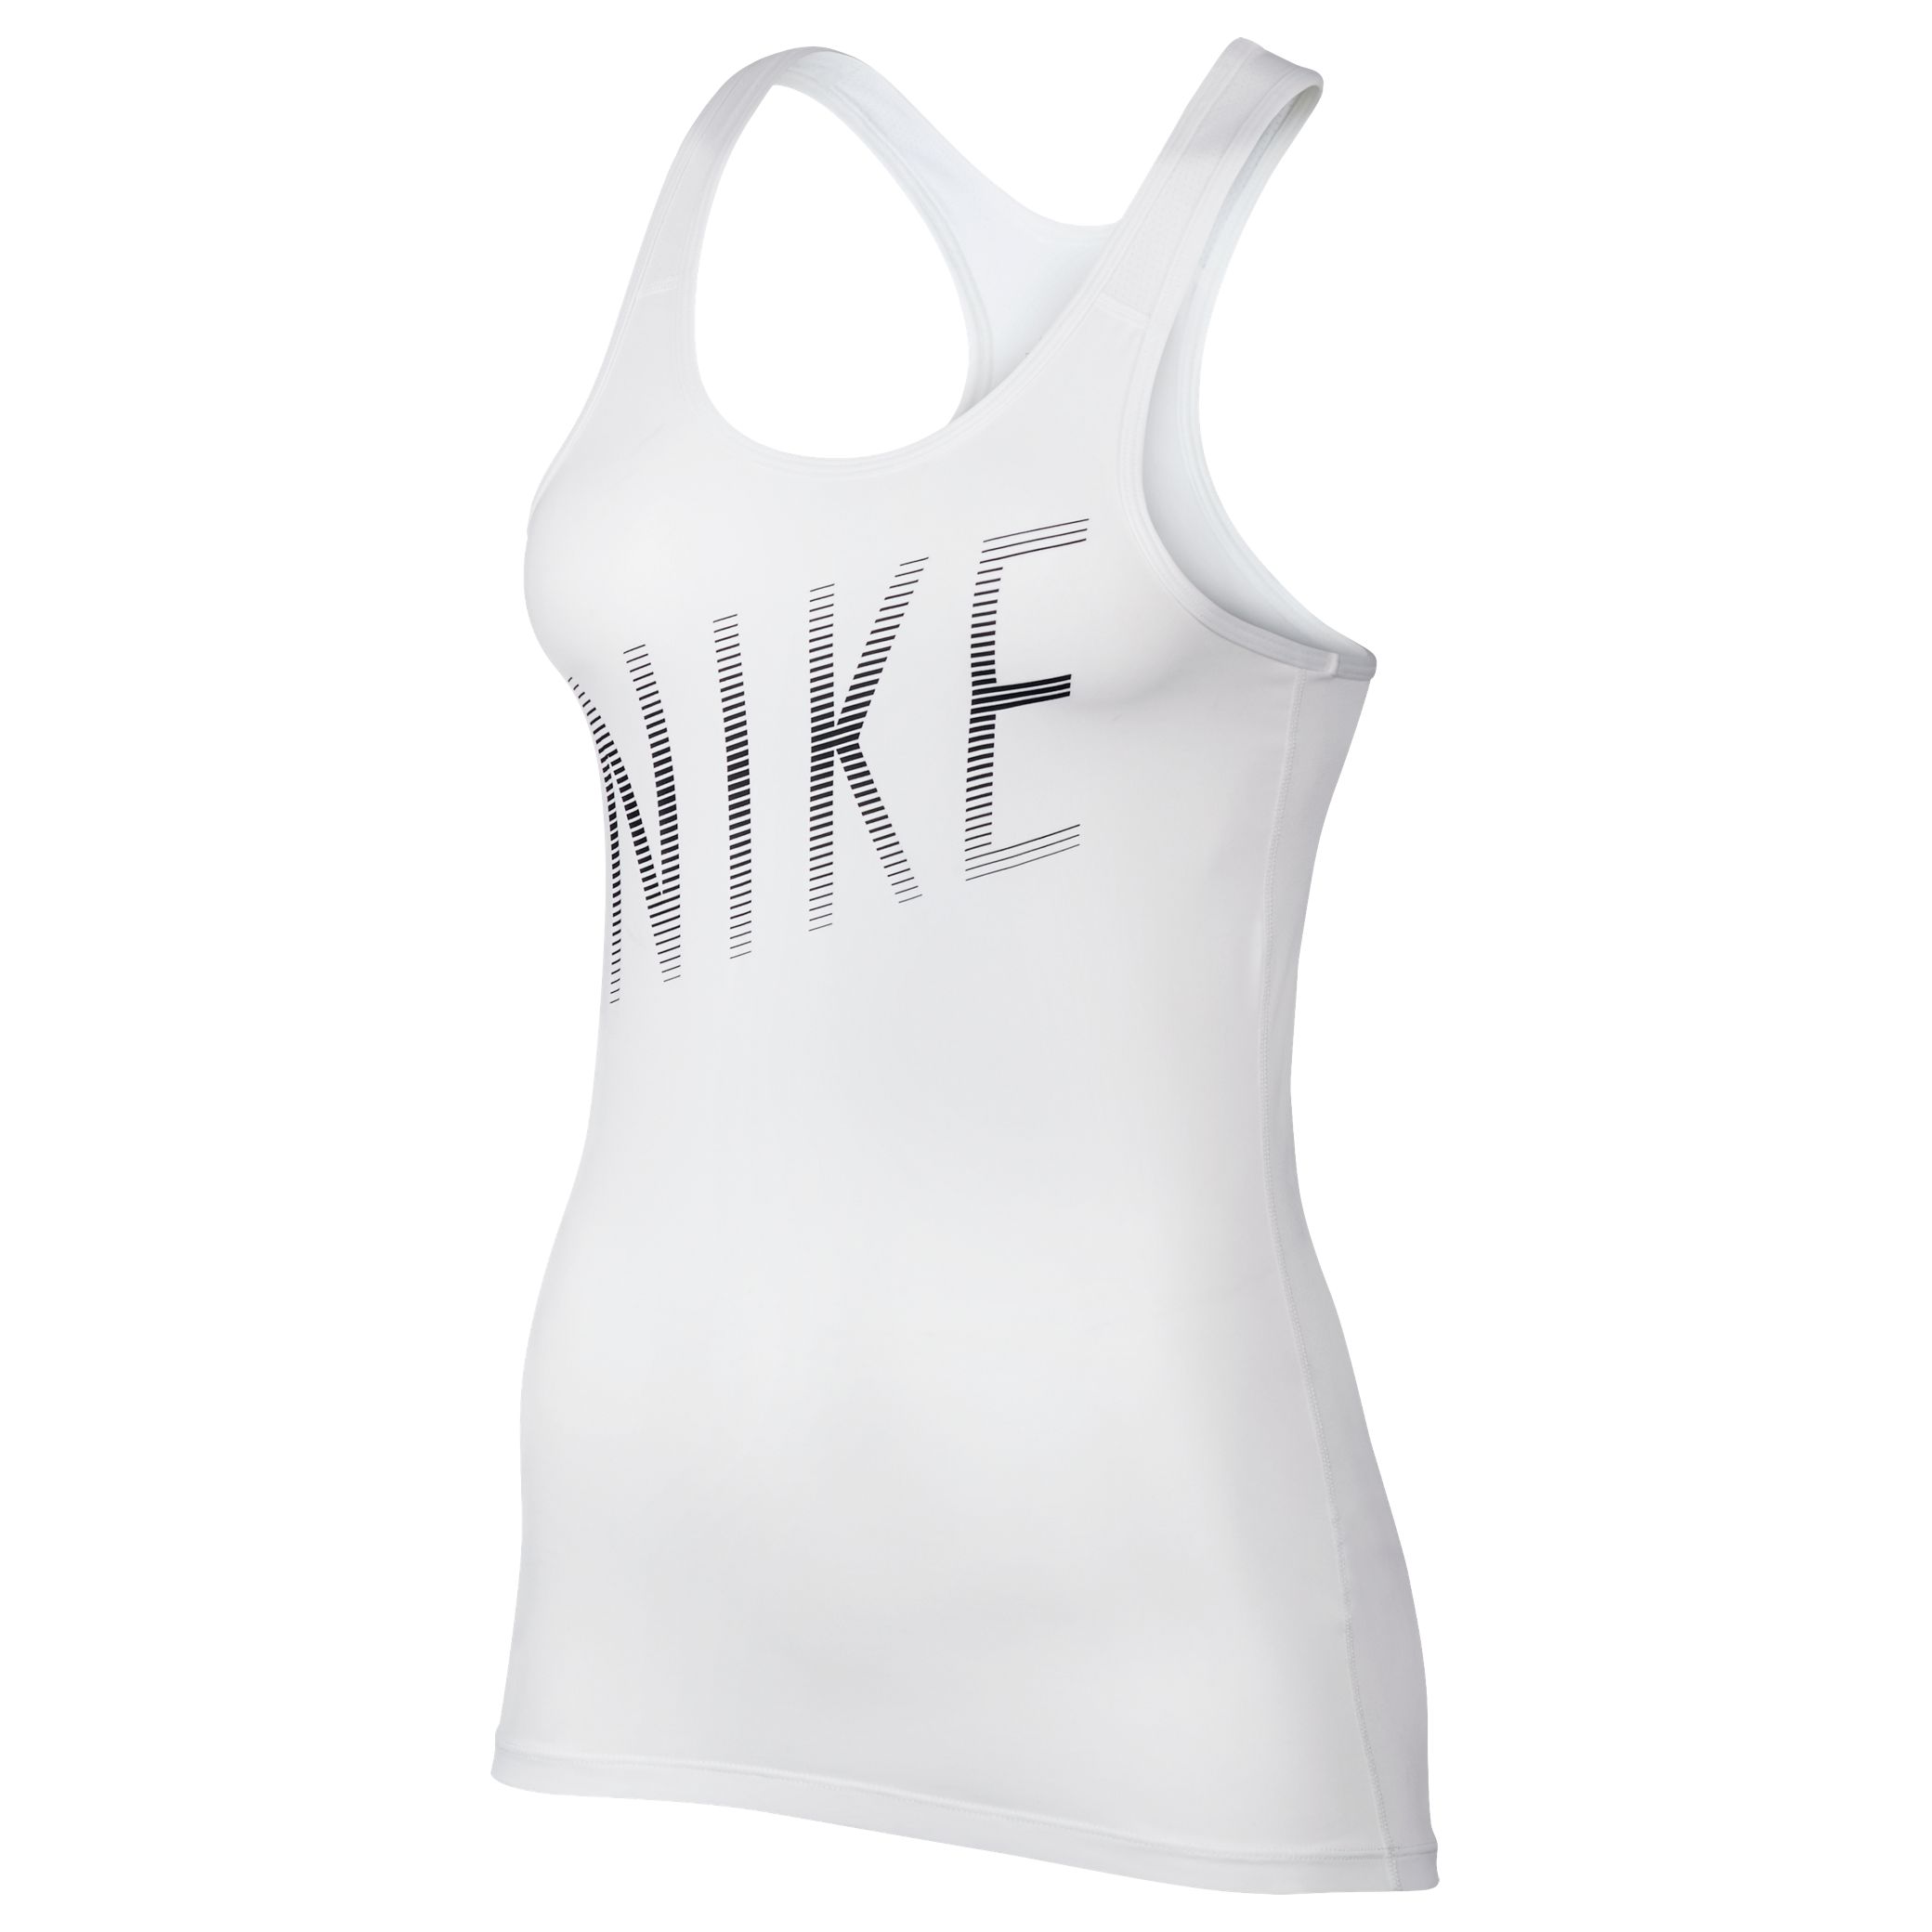 Nike Cool Tank Top, White/Black